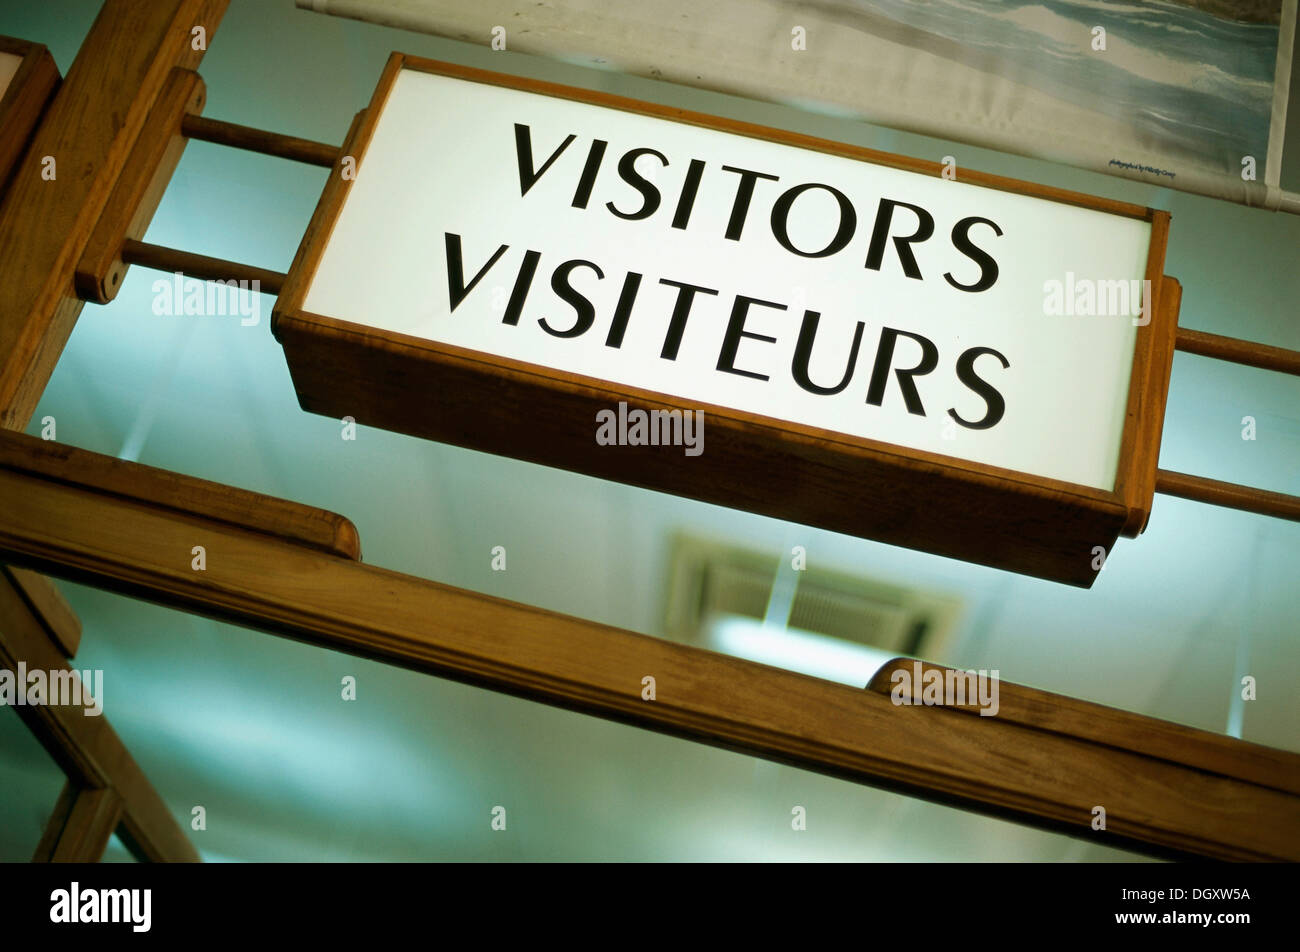 Sign, 'Visitors Visiteurs', customs desk for arriving passengers, Mahe, Seychelles Stock Photo